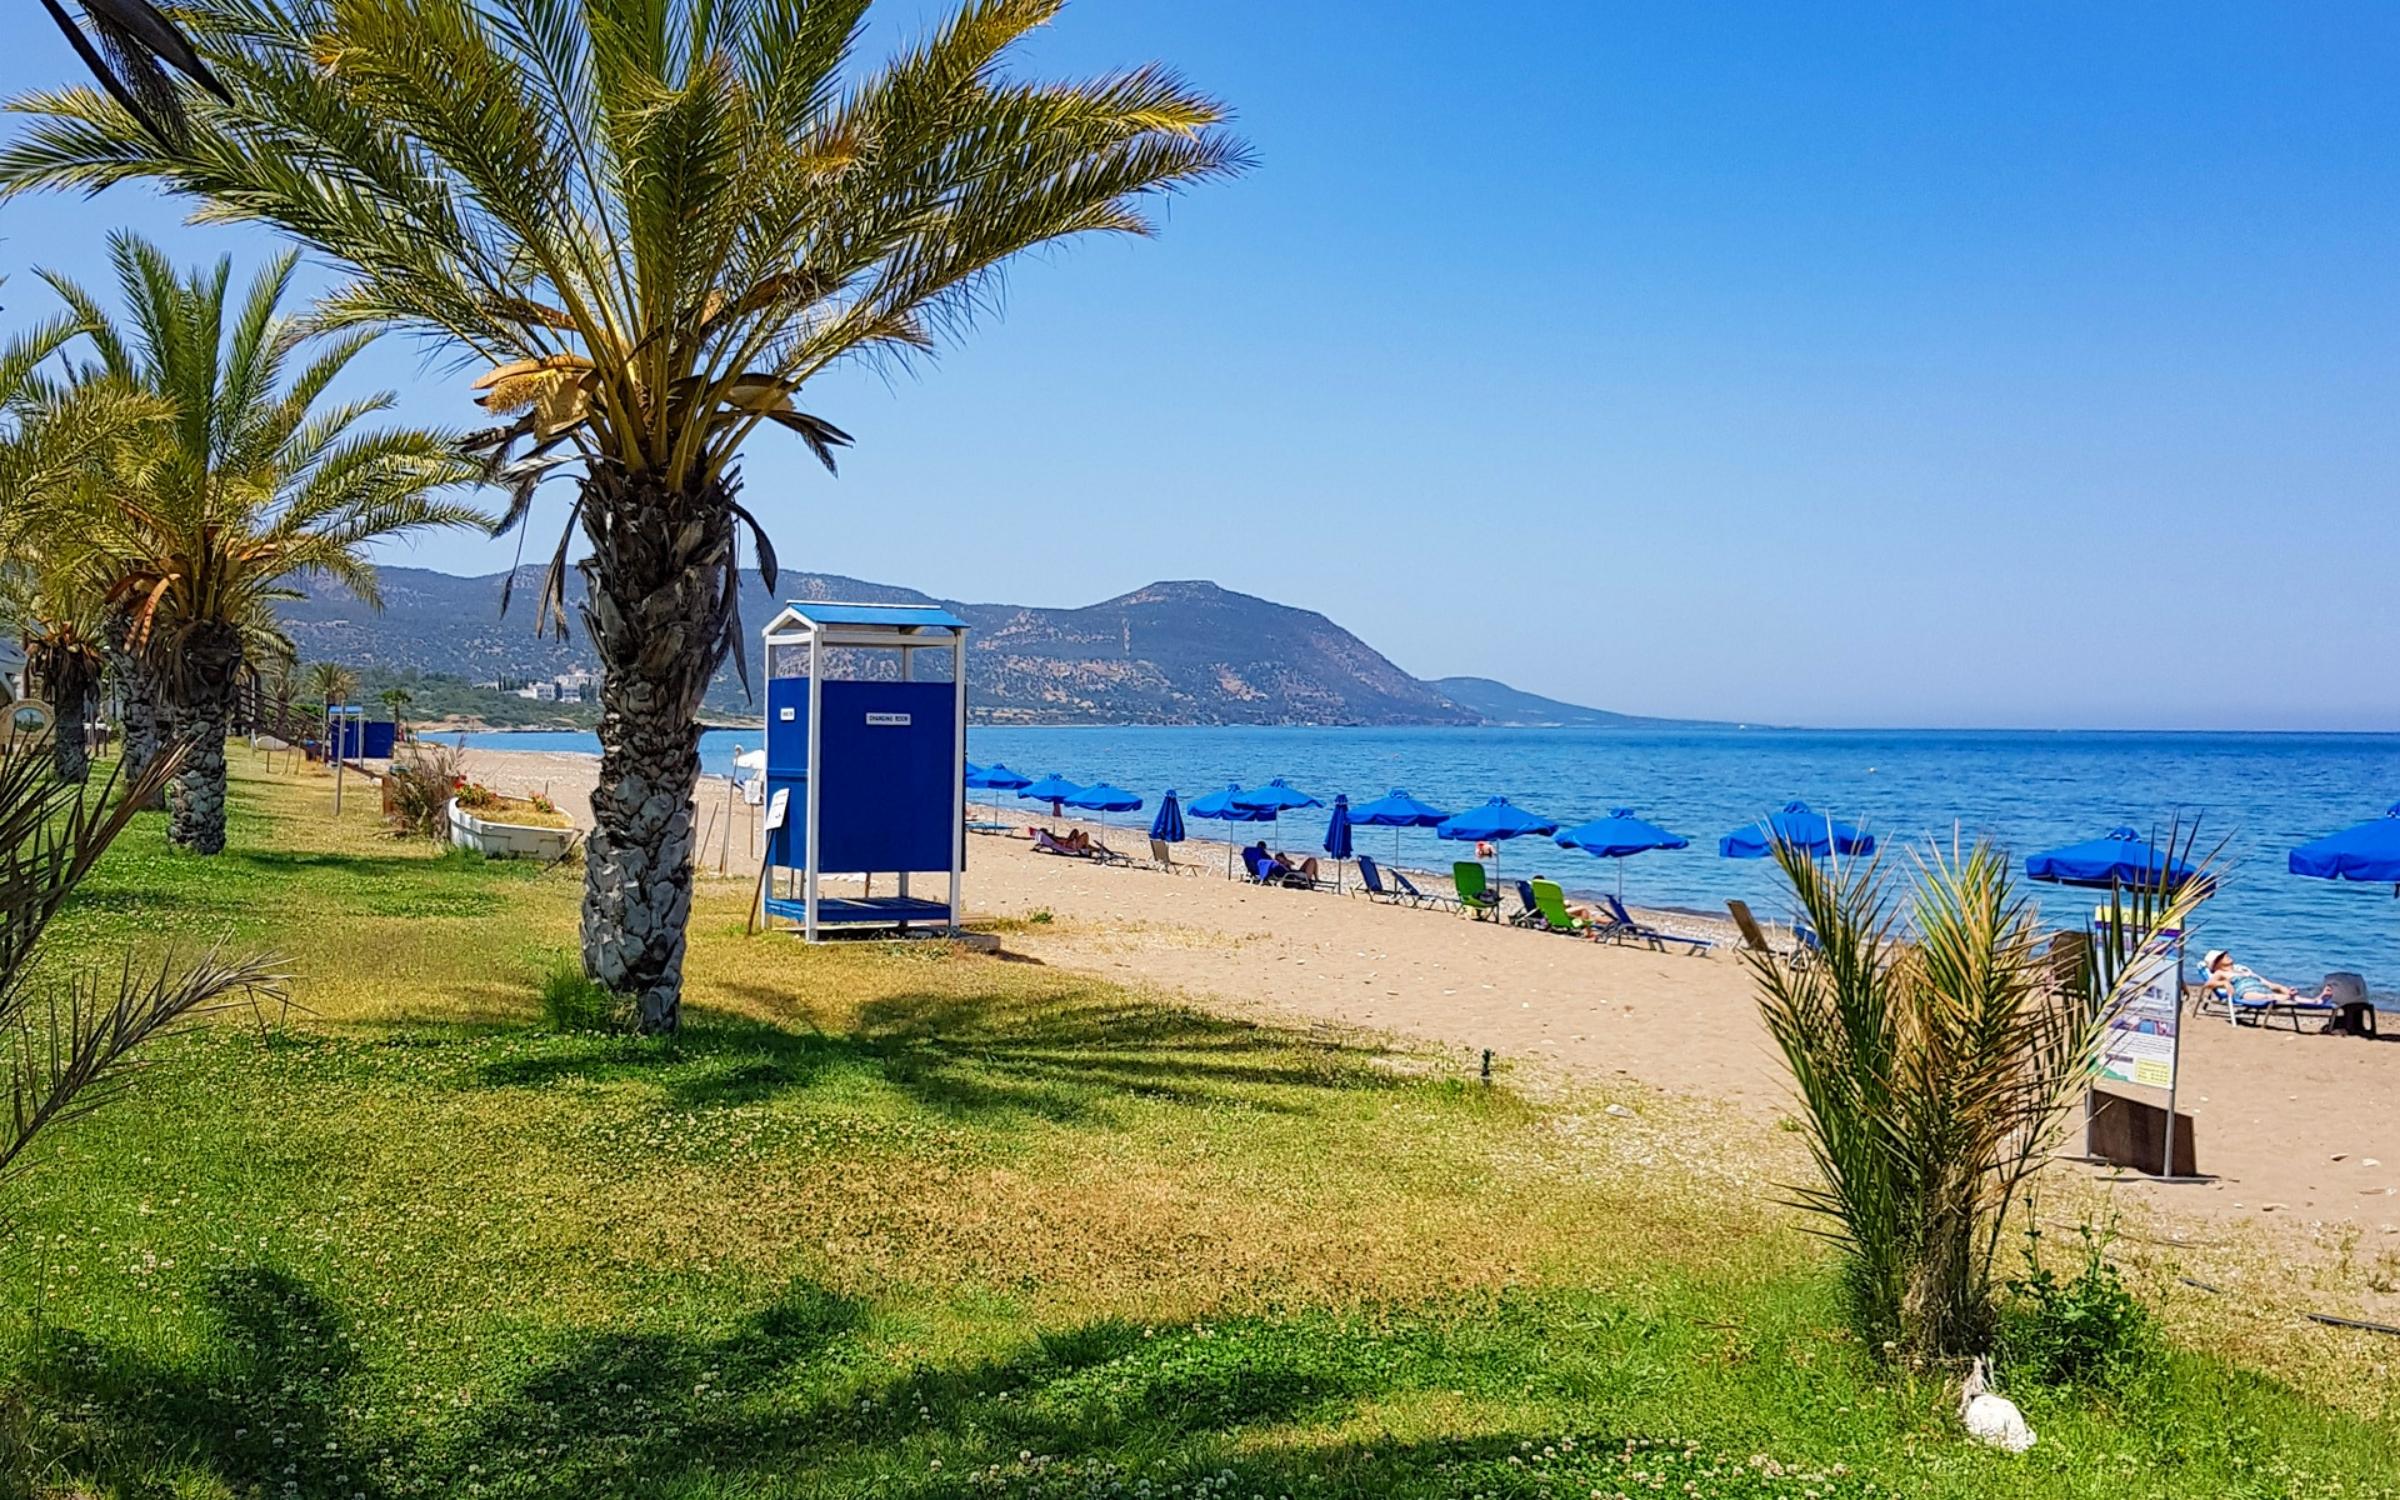 Latchi Beach in Cyprus